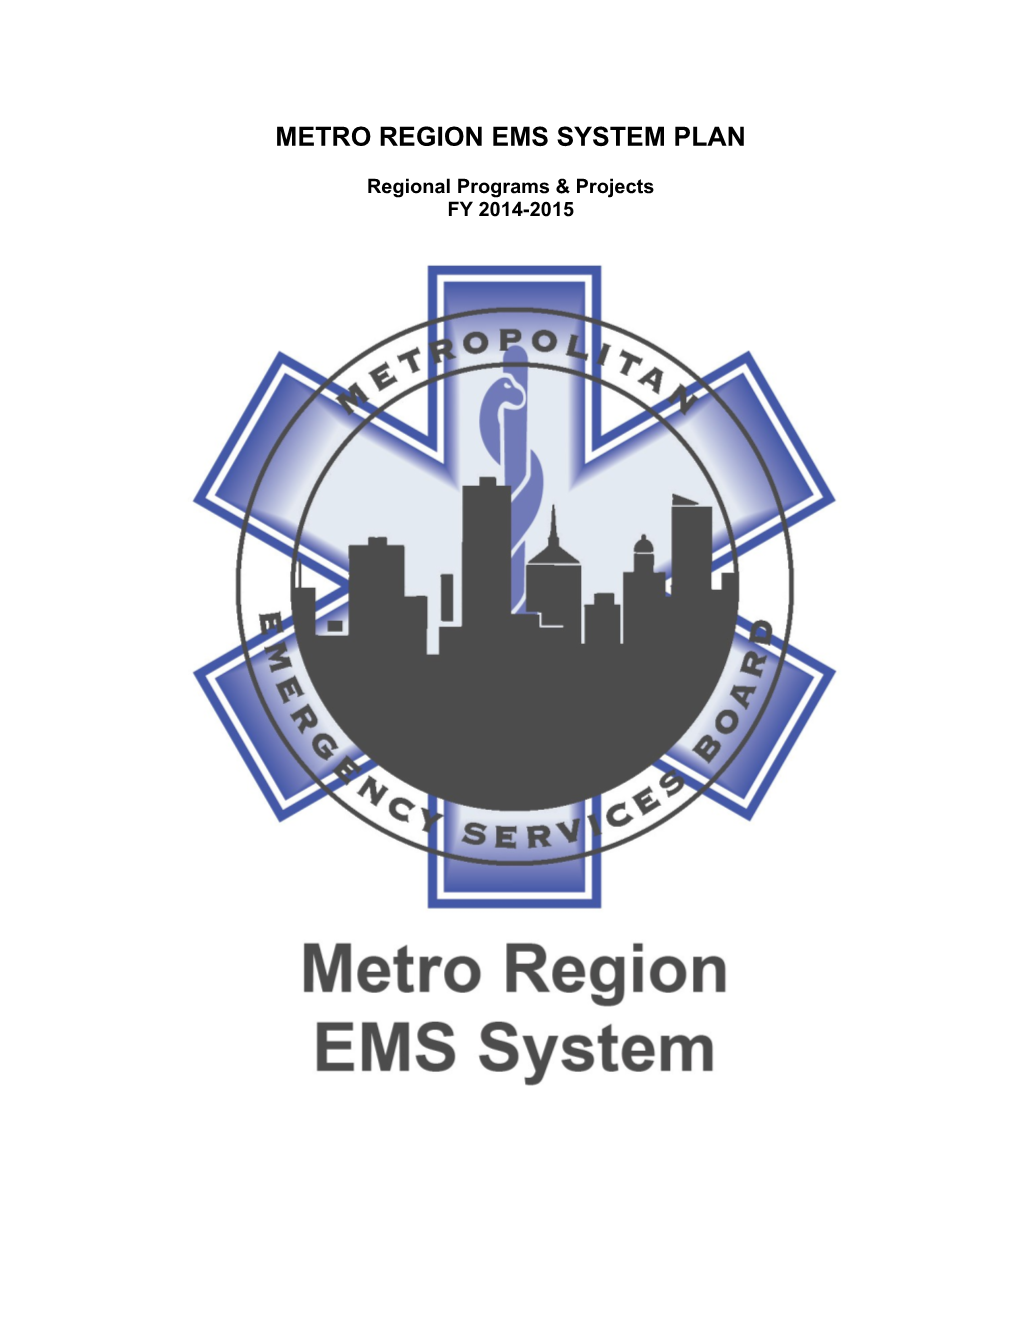 Metro Region Ems System Plan